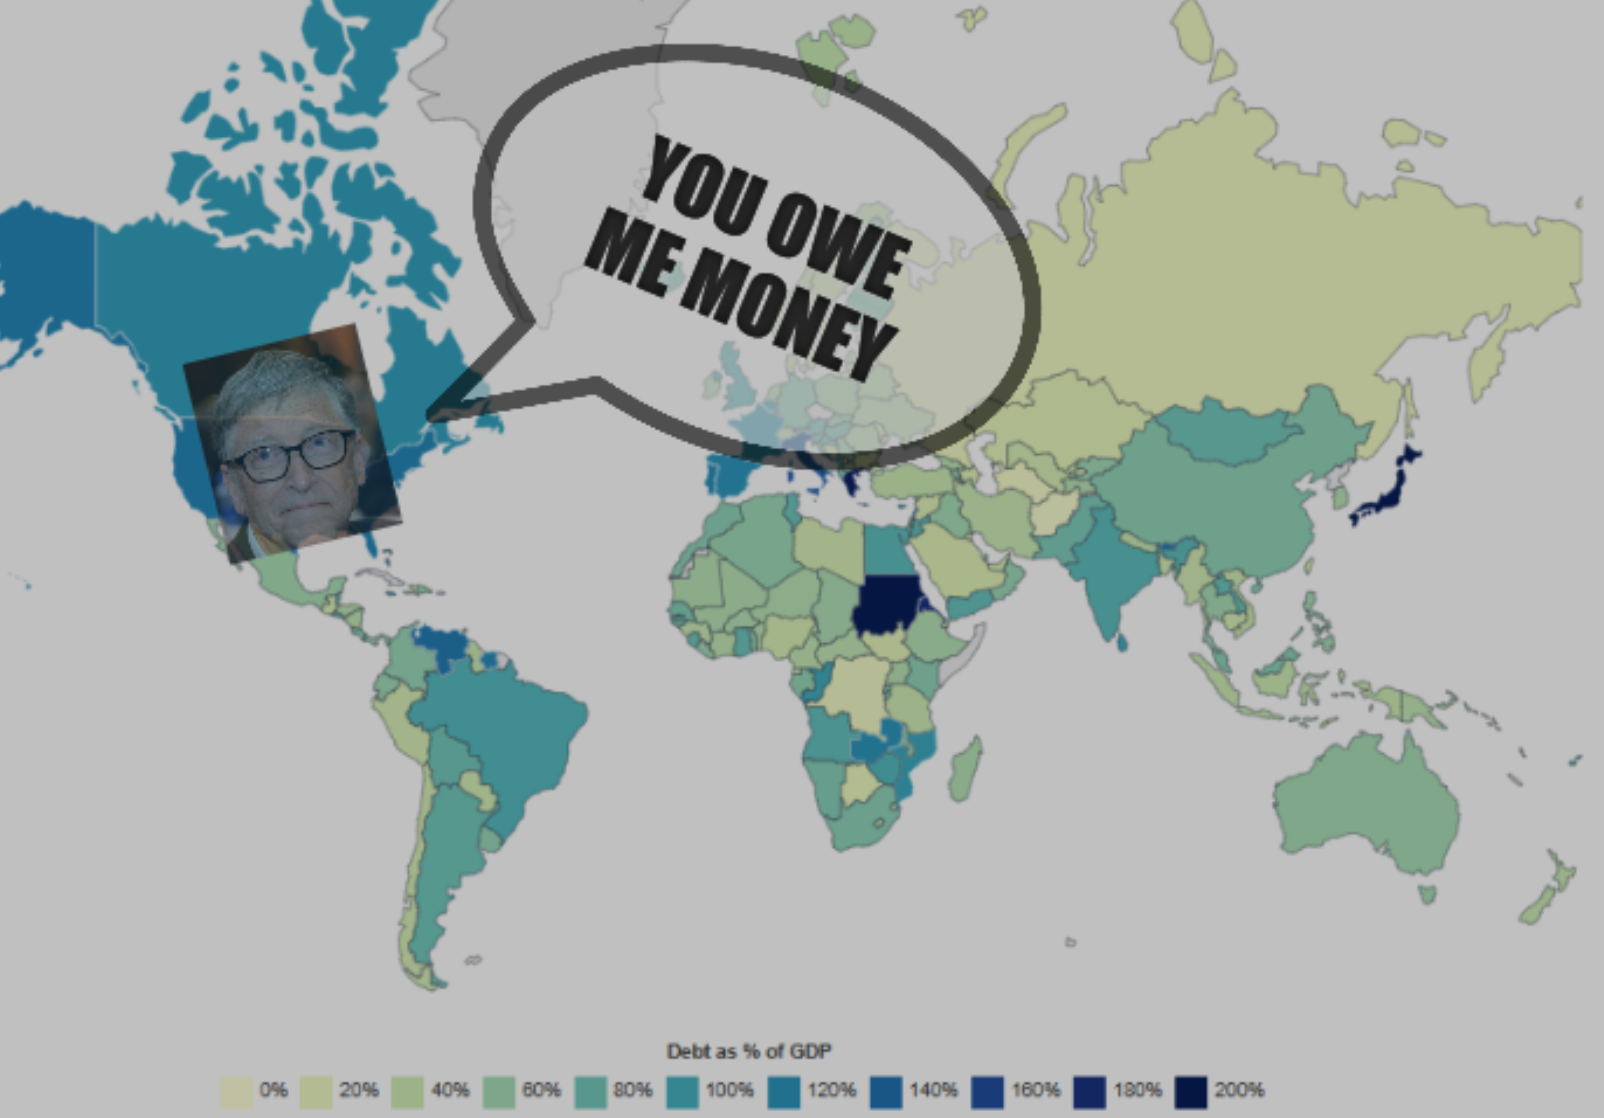 Bill Gates: You owe me money